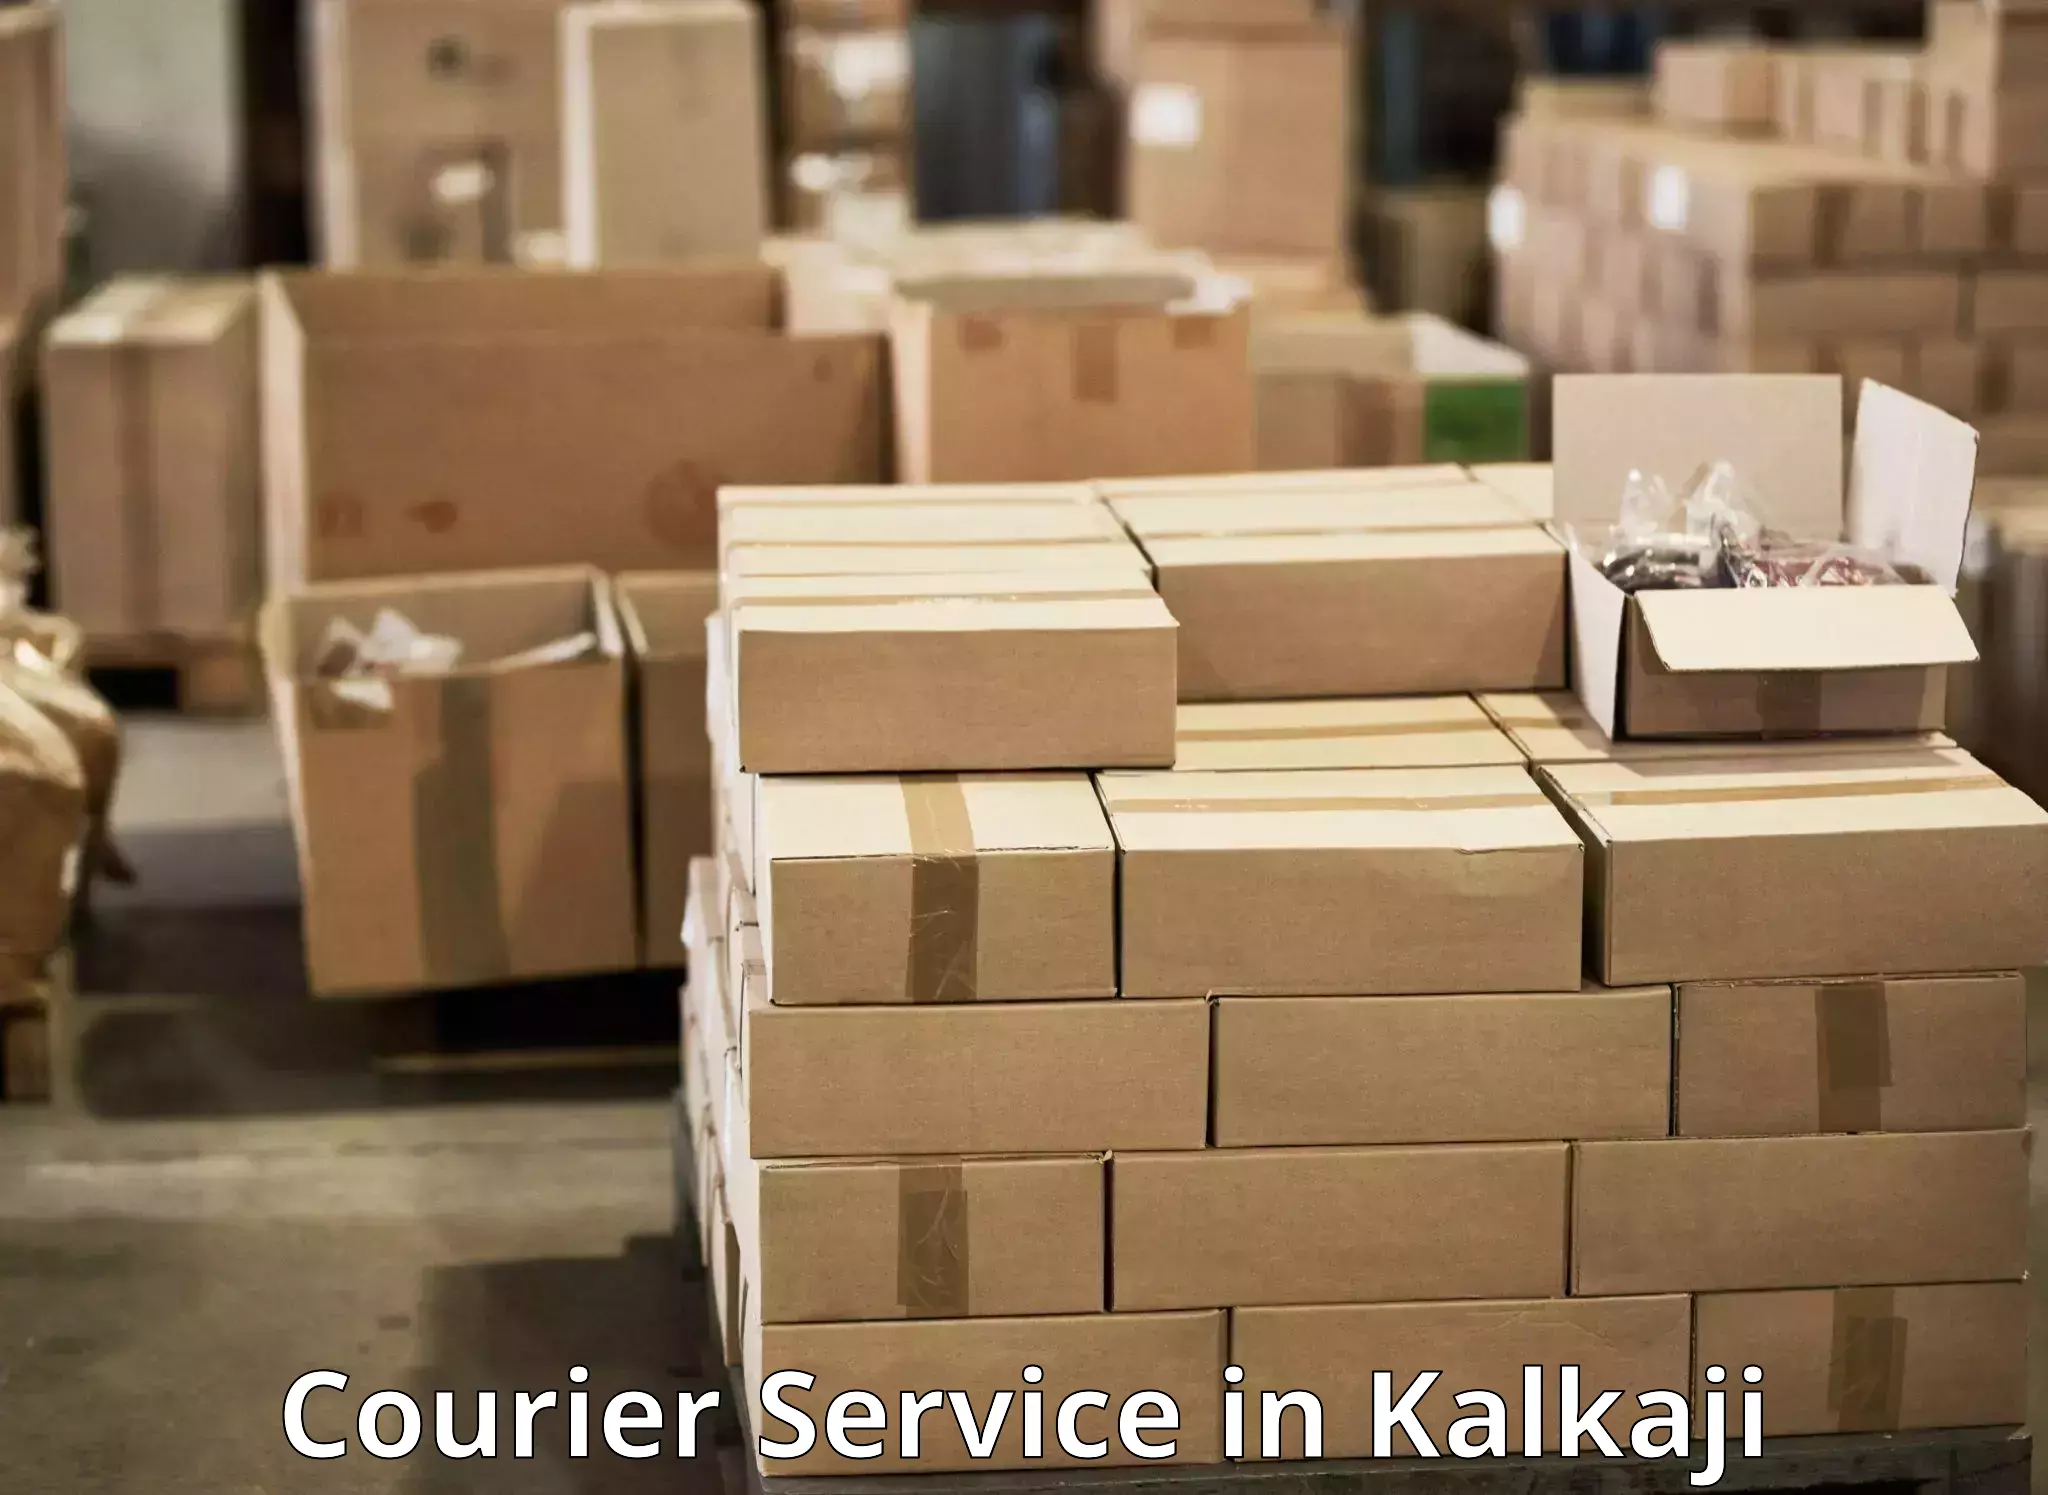 24-hour courier services in Kalkaji